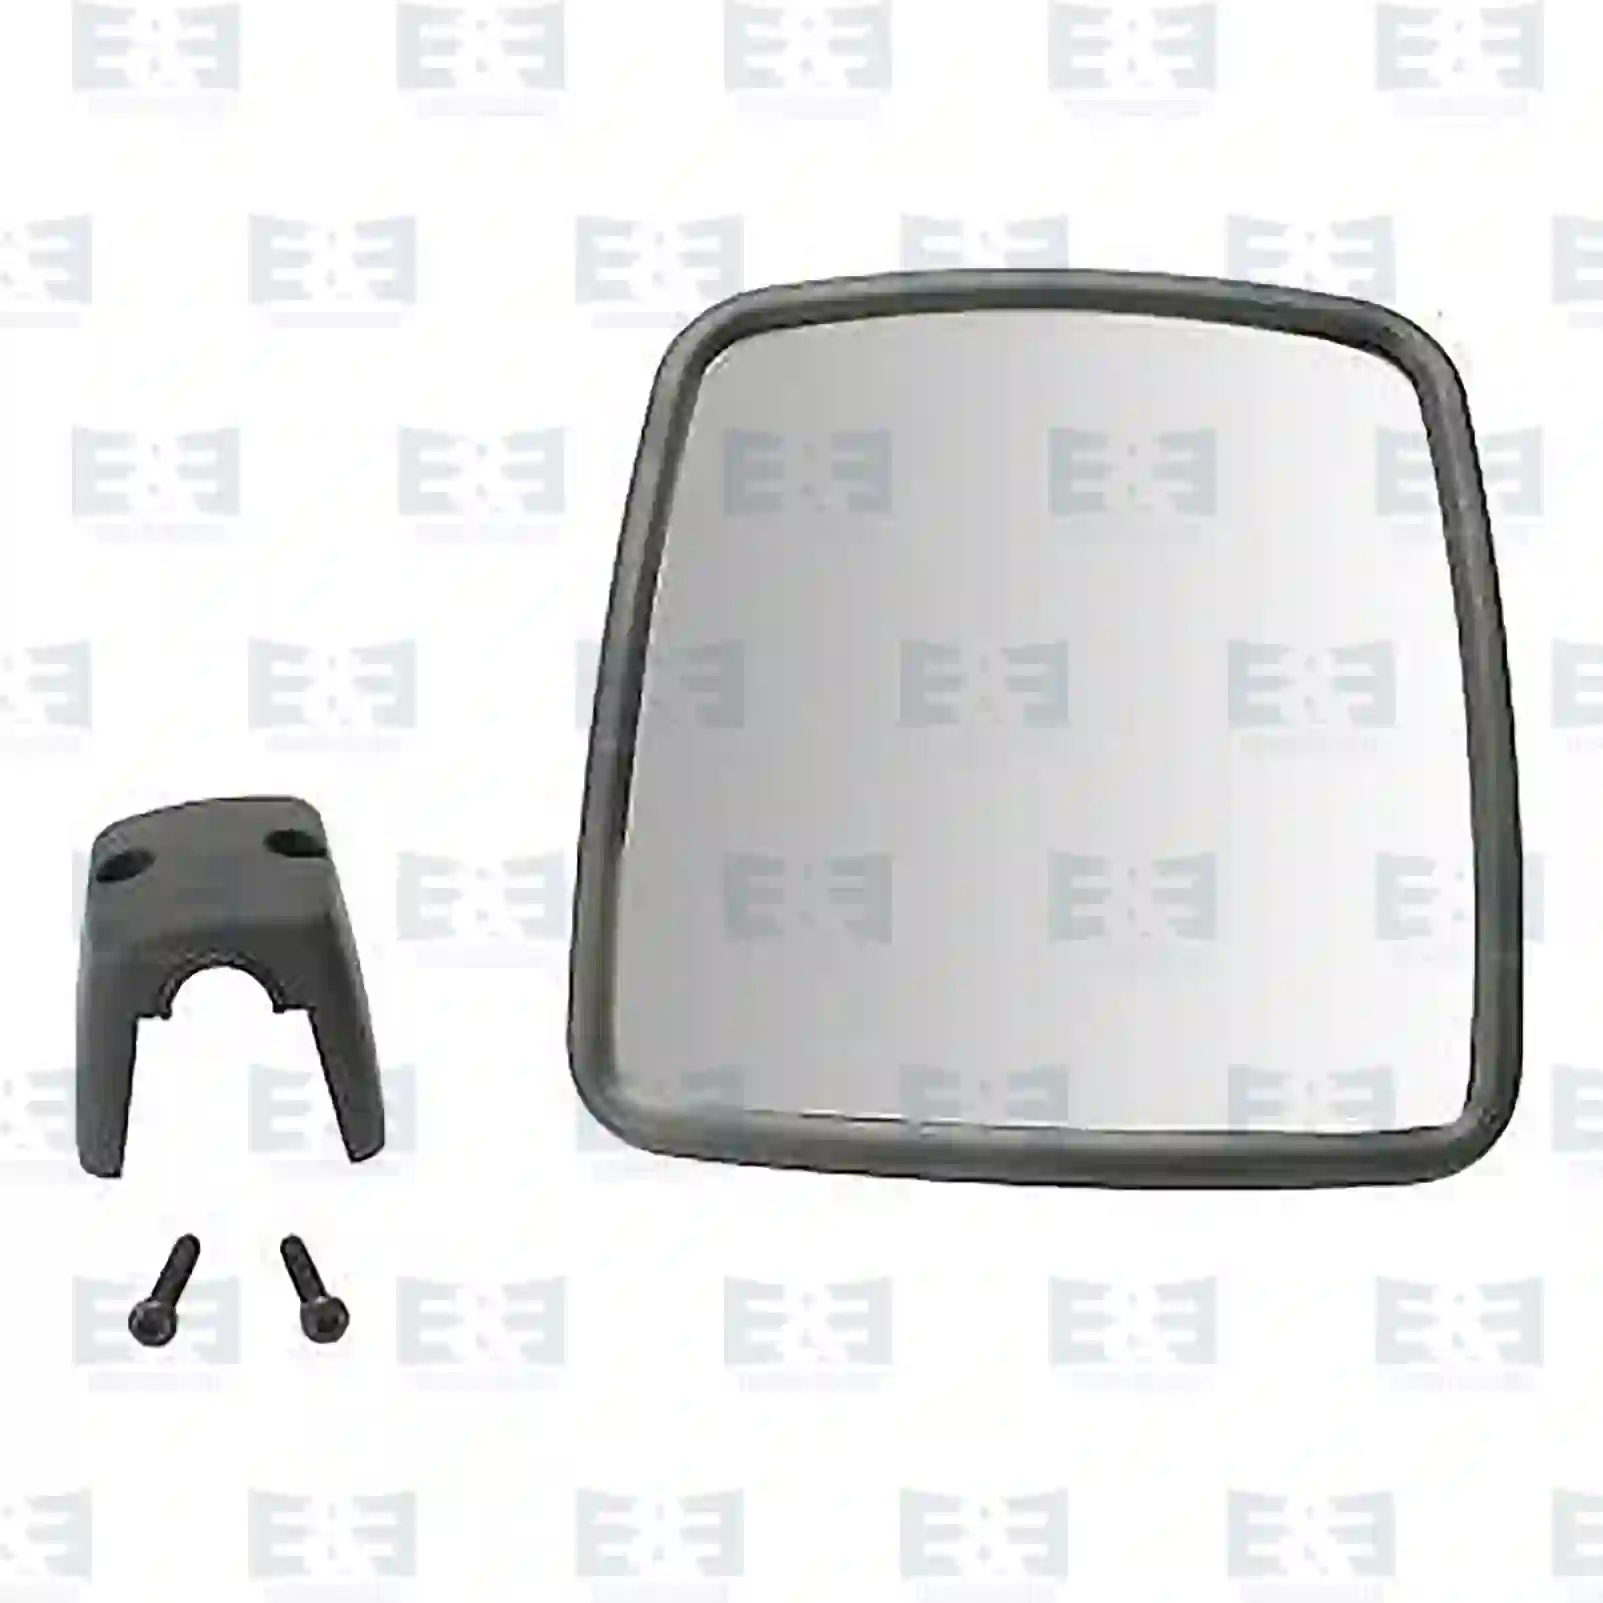  Wide view mirror || E&E Truck Spare Parts | Truck Spare Parts, Auotomotive Spare Parts